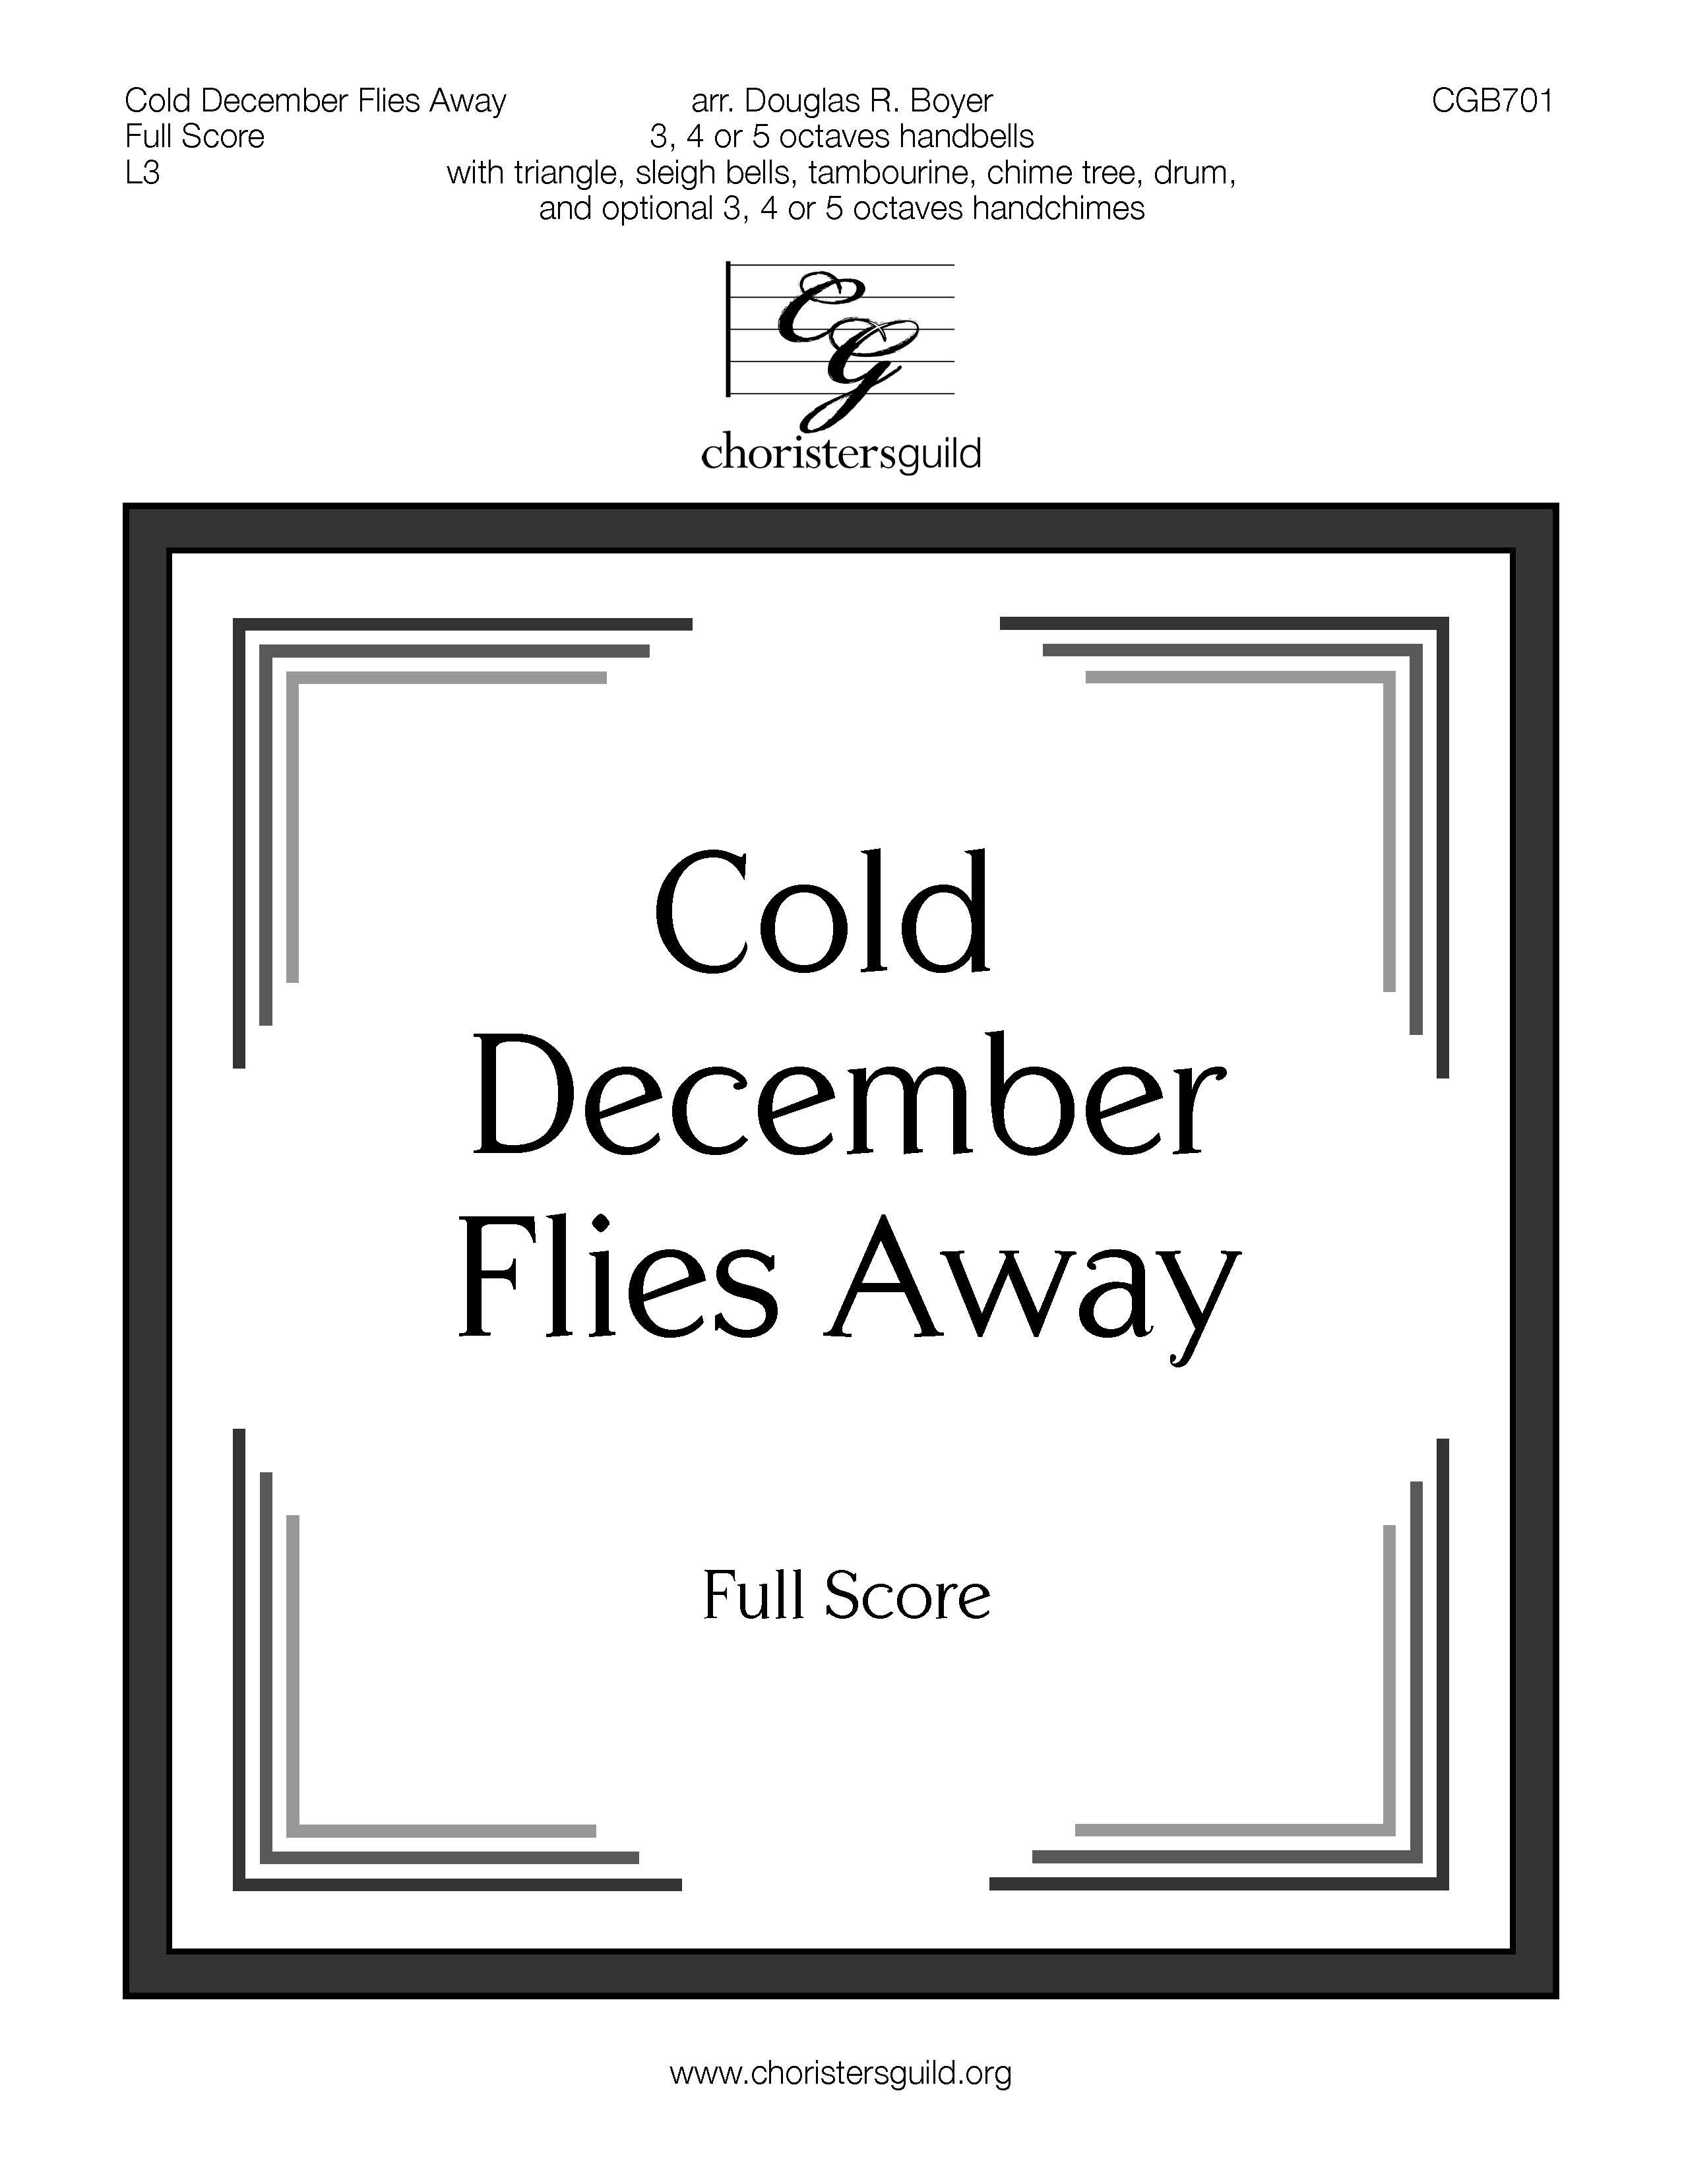 Cold December Flies Away - Full Score